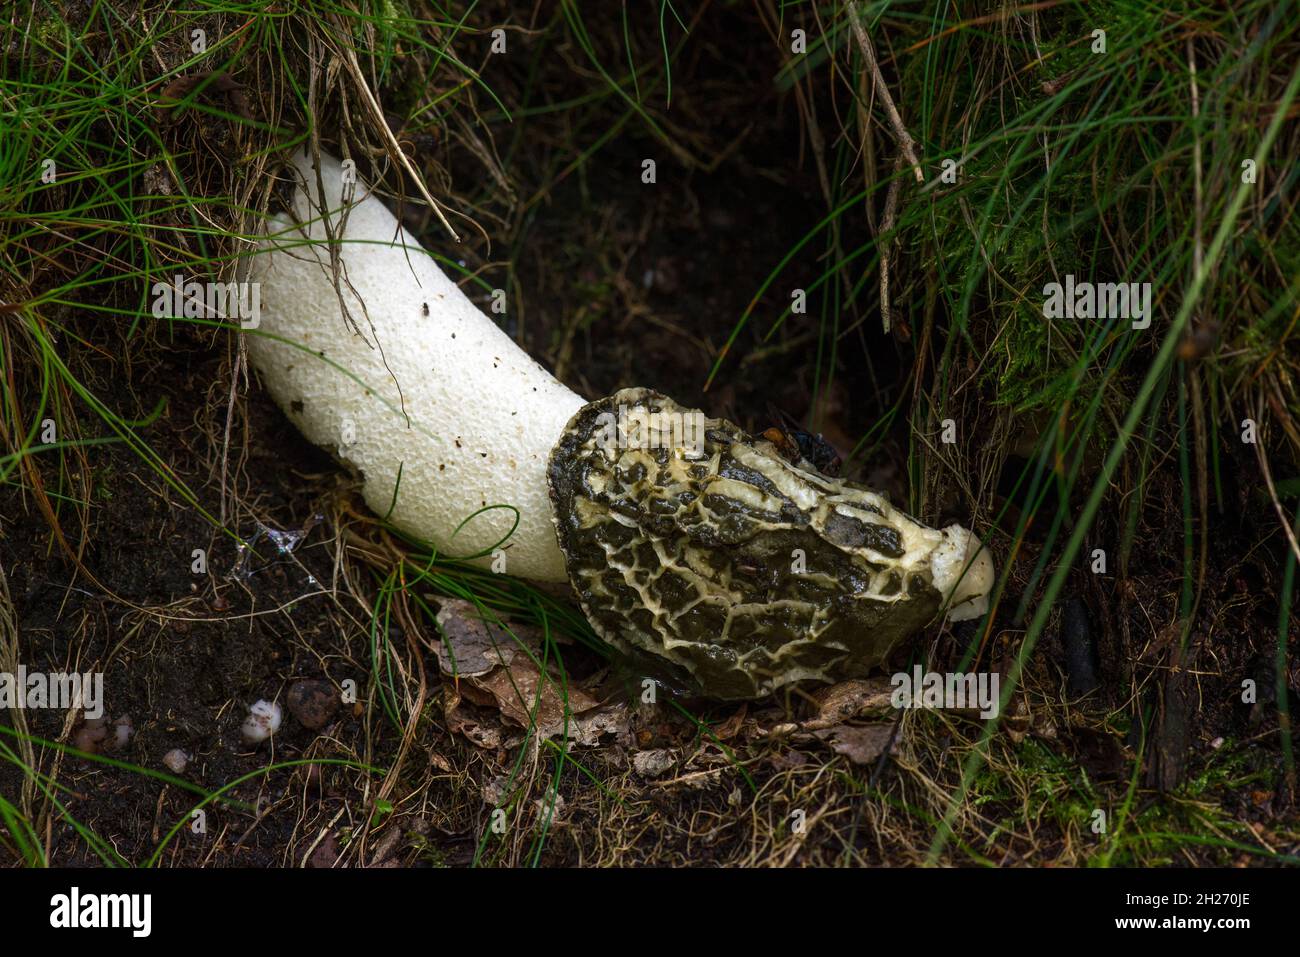 common stink horn mushroom Stock Photo